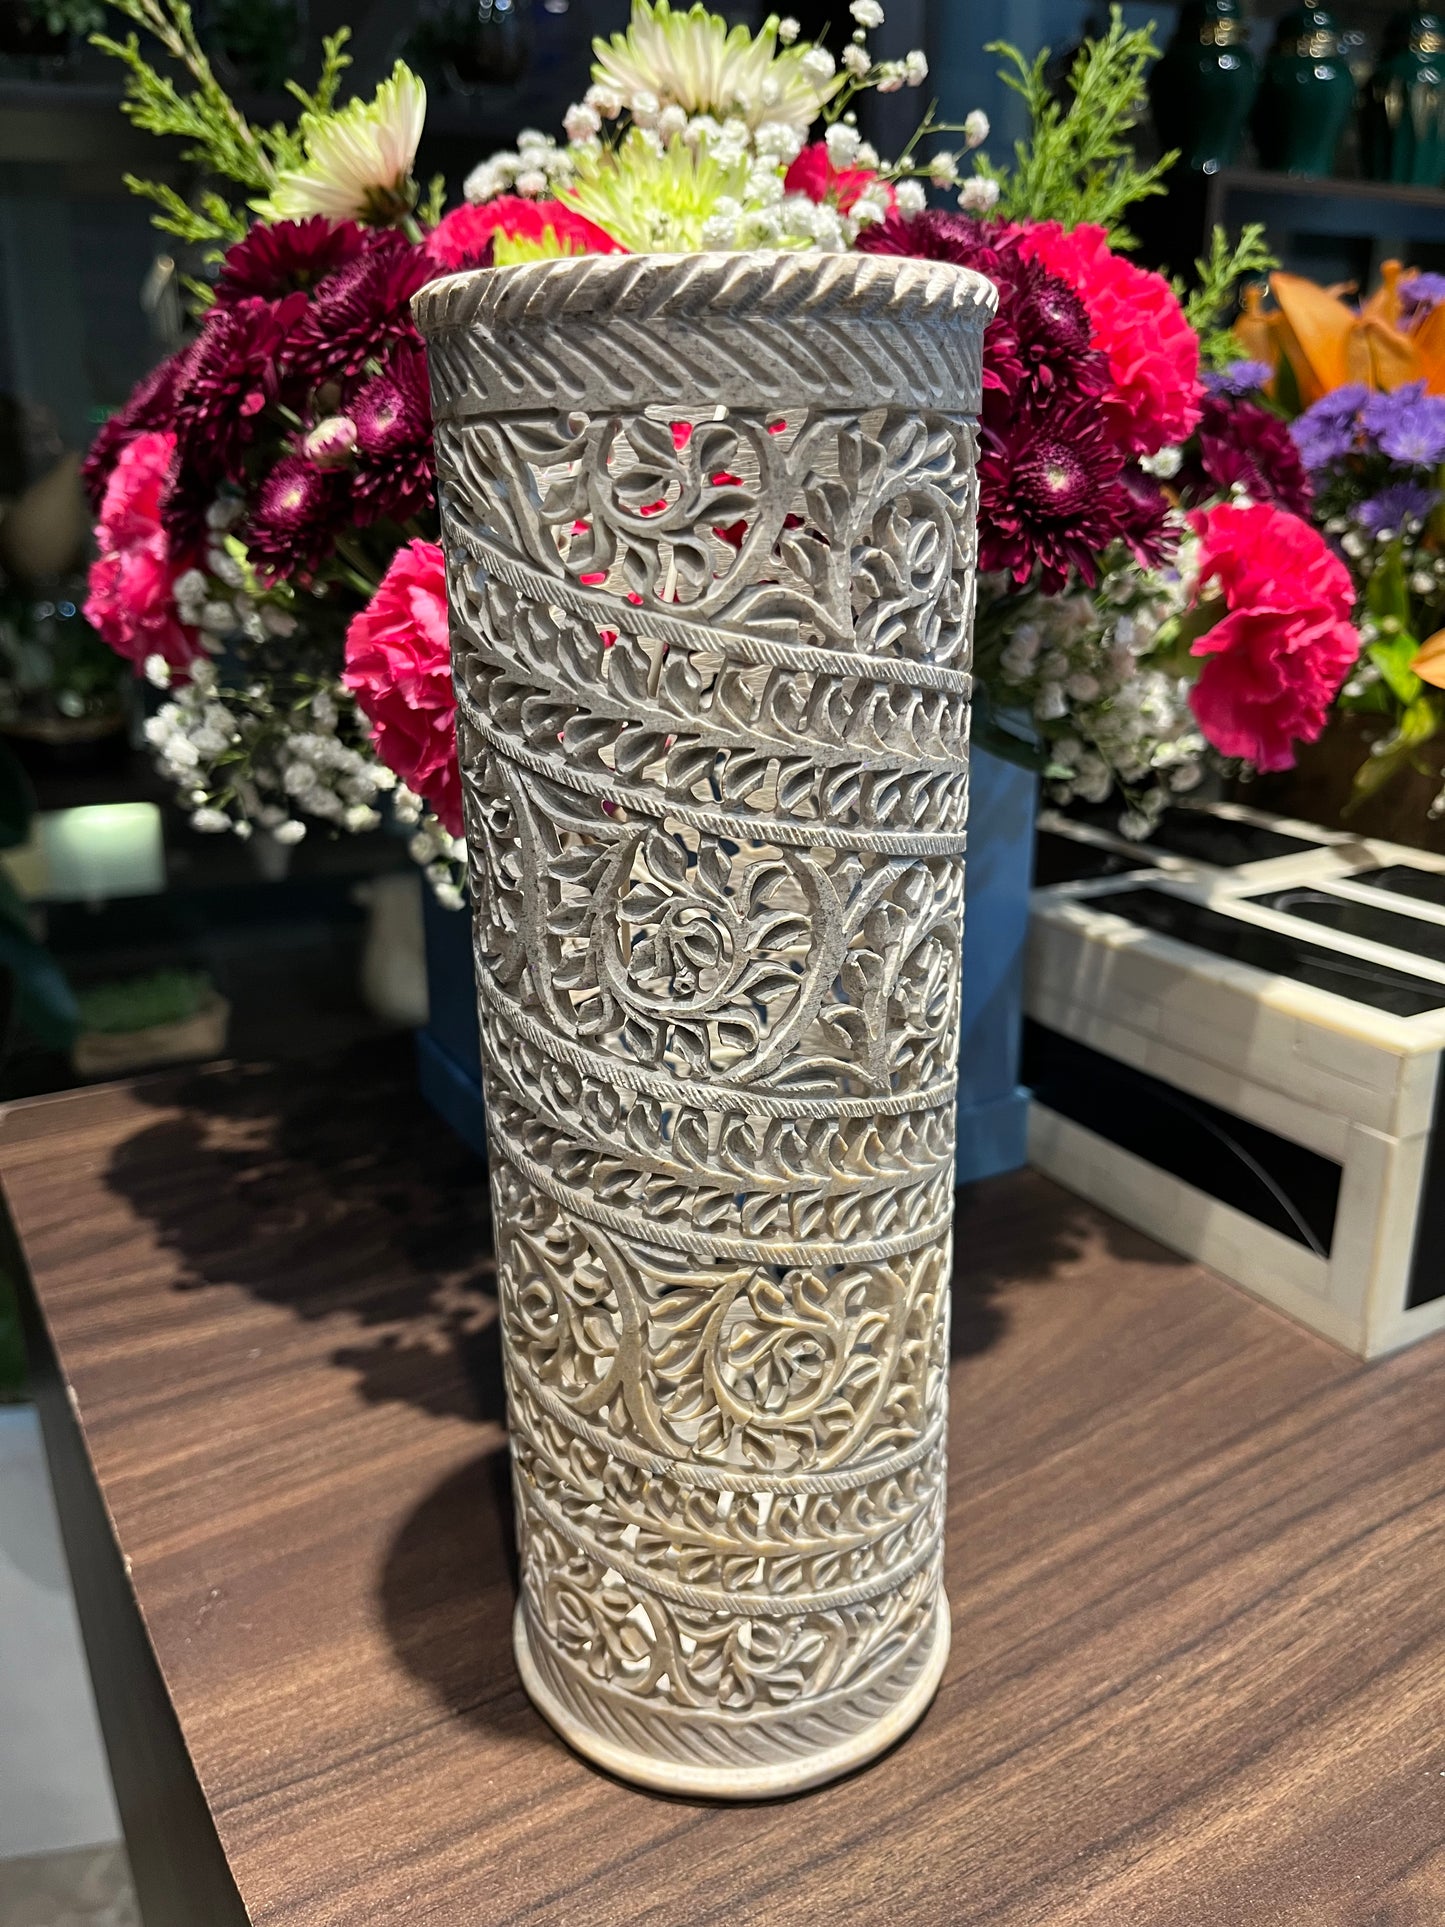 Stone craved light vase